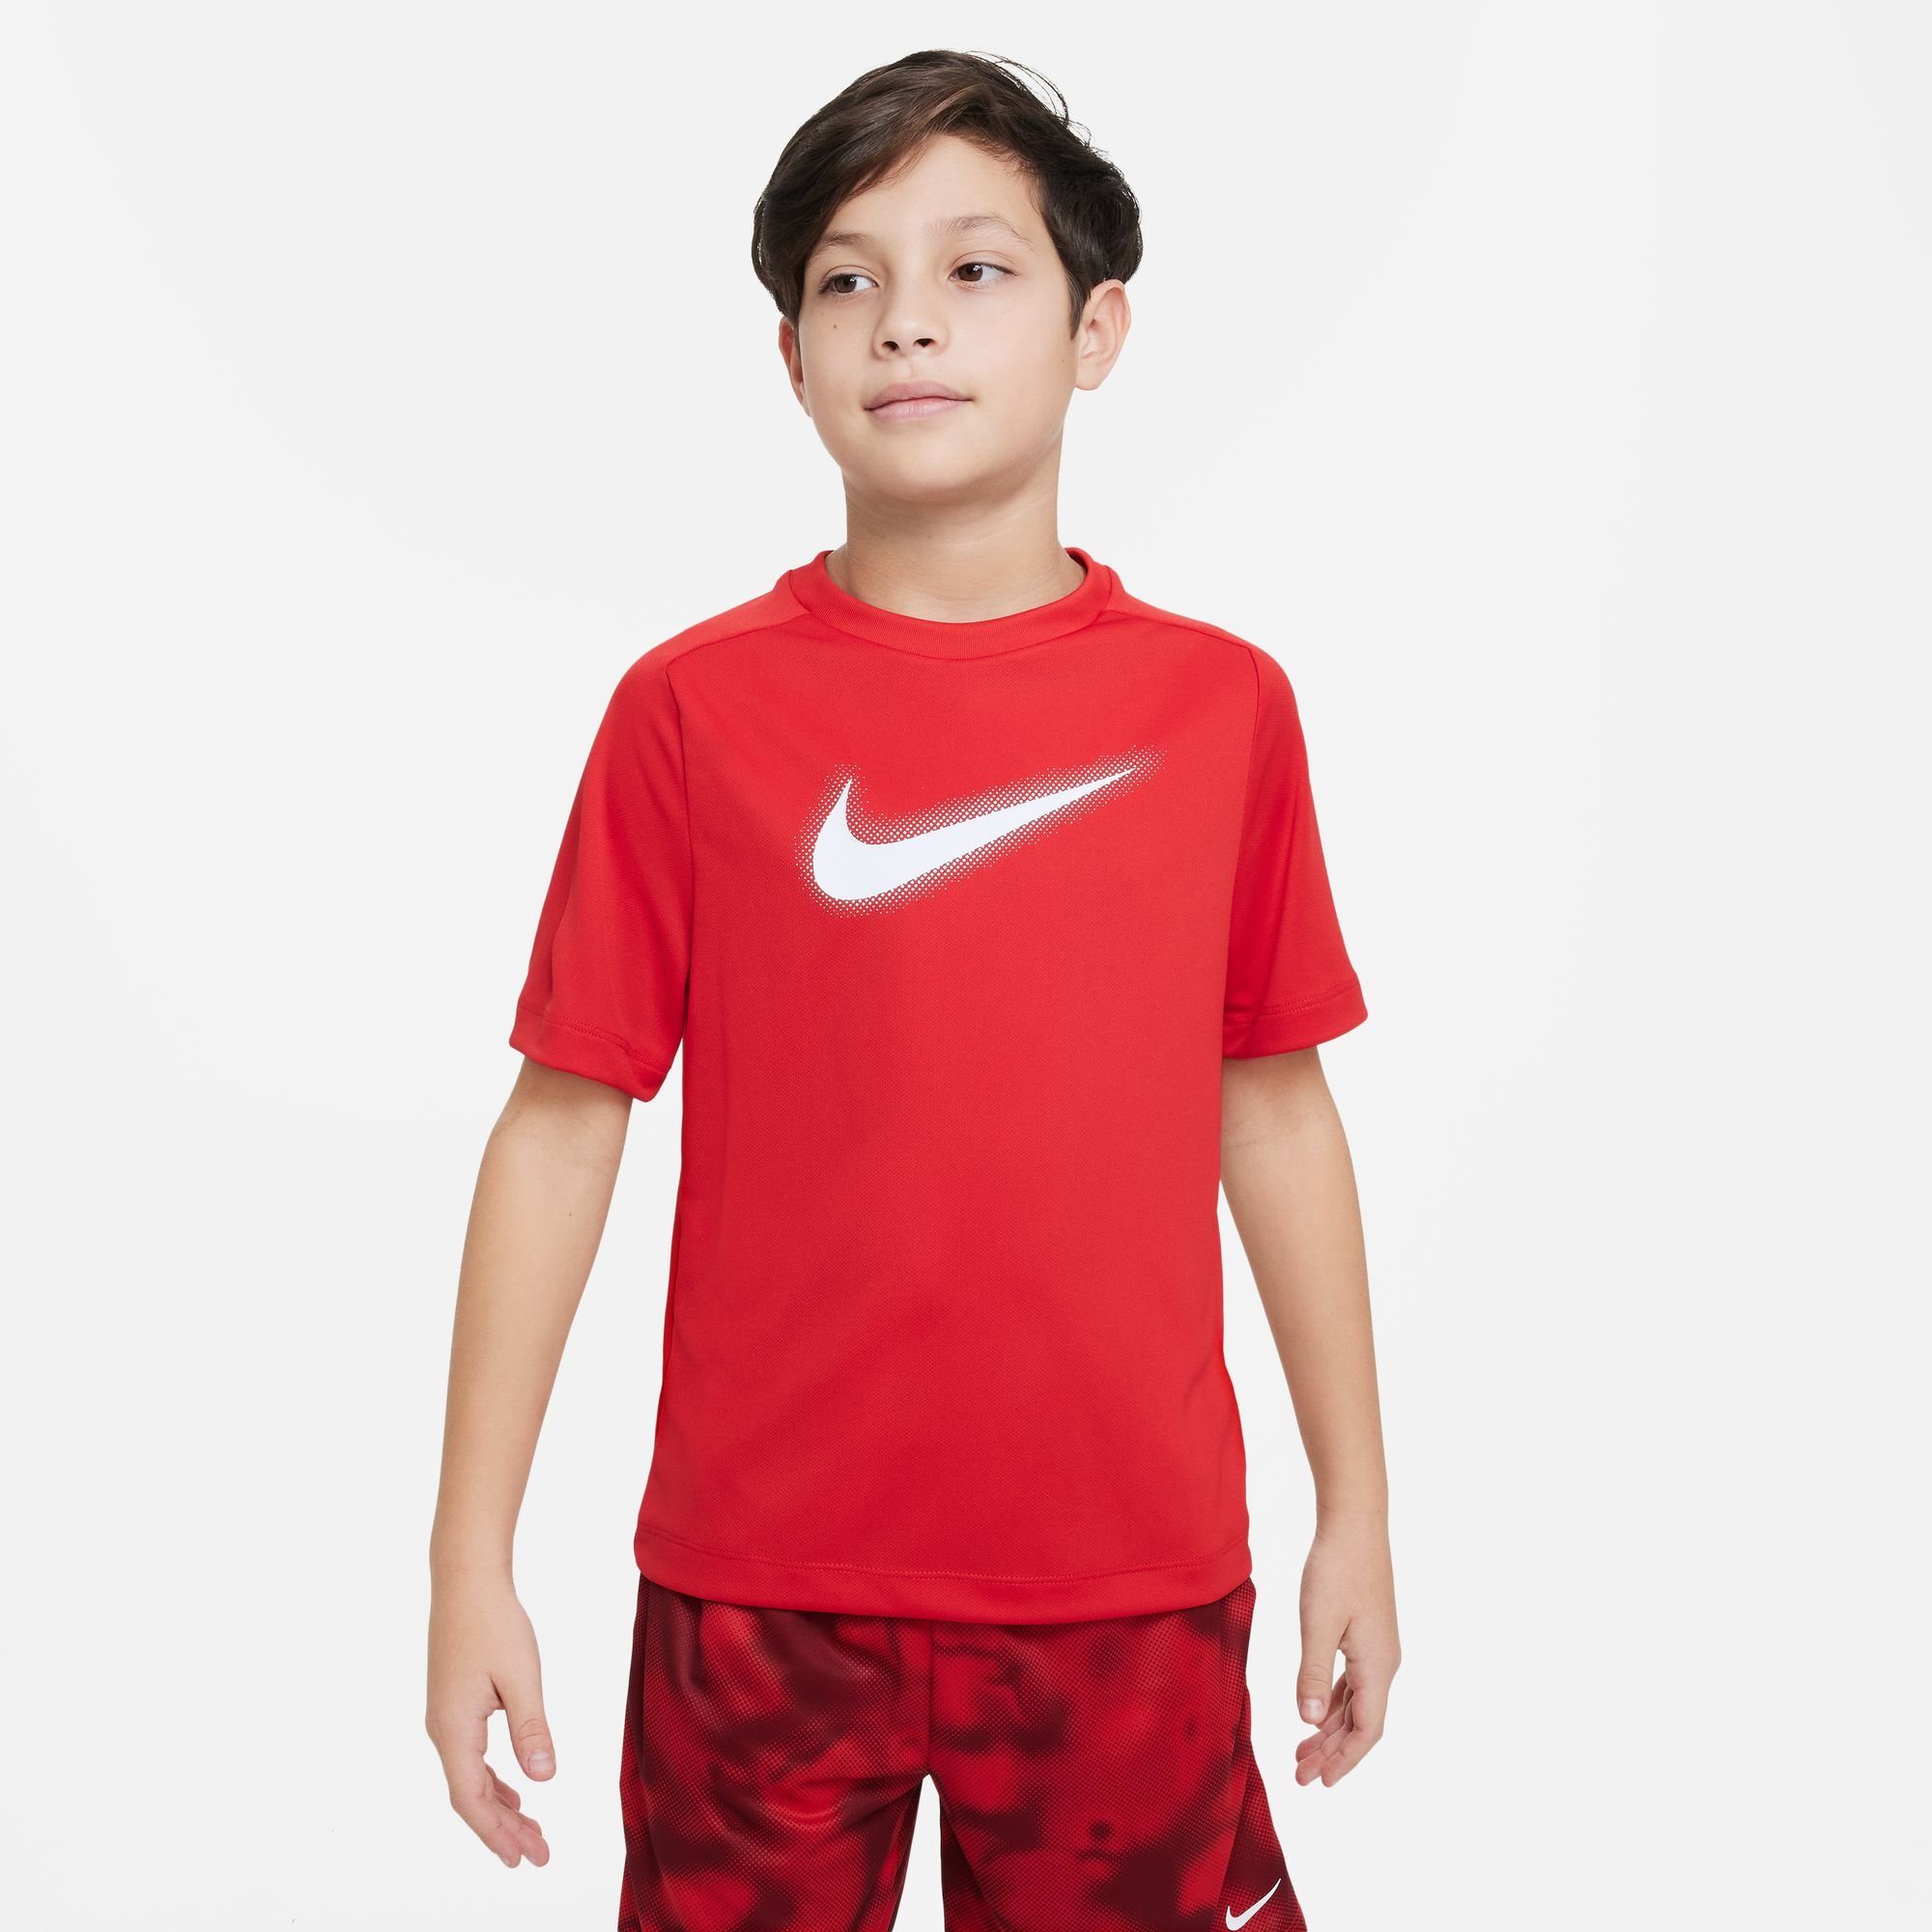 MULTI+ GRAPHIC Nike TRAINING KIDS' rot DRI-FIT (BOYS) BIG Trainingsshirt TOP